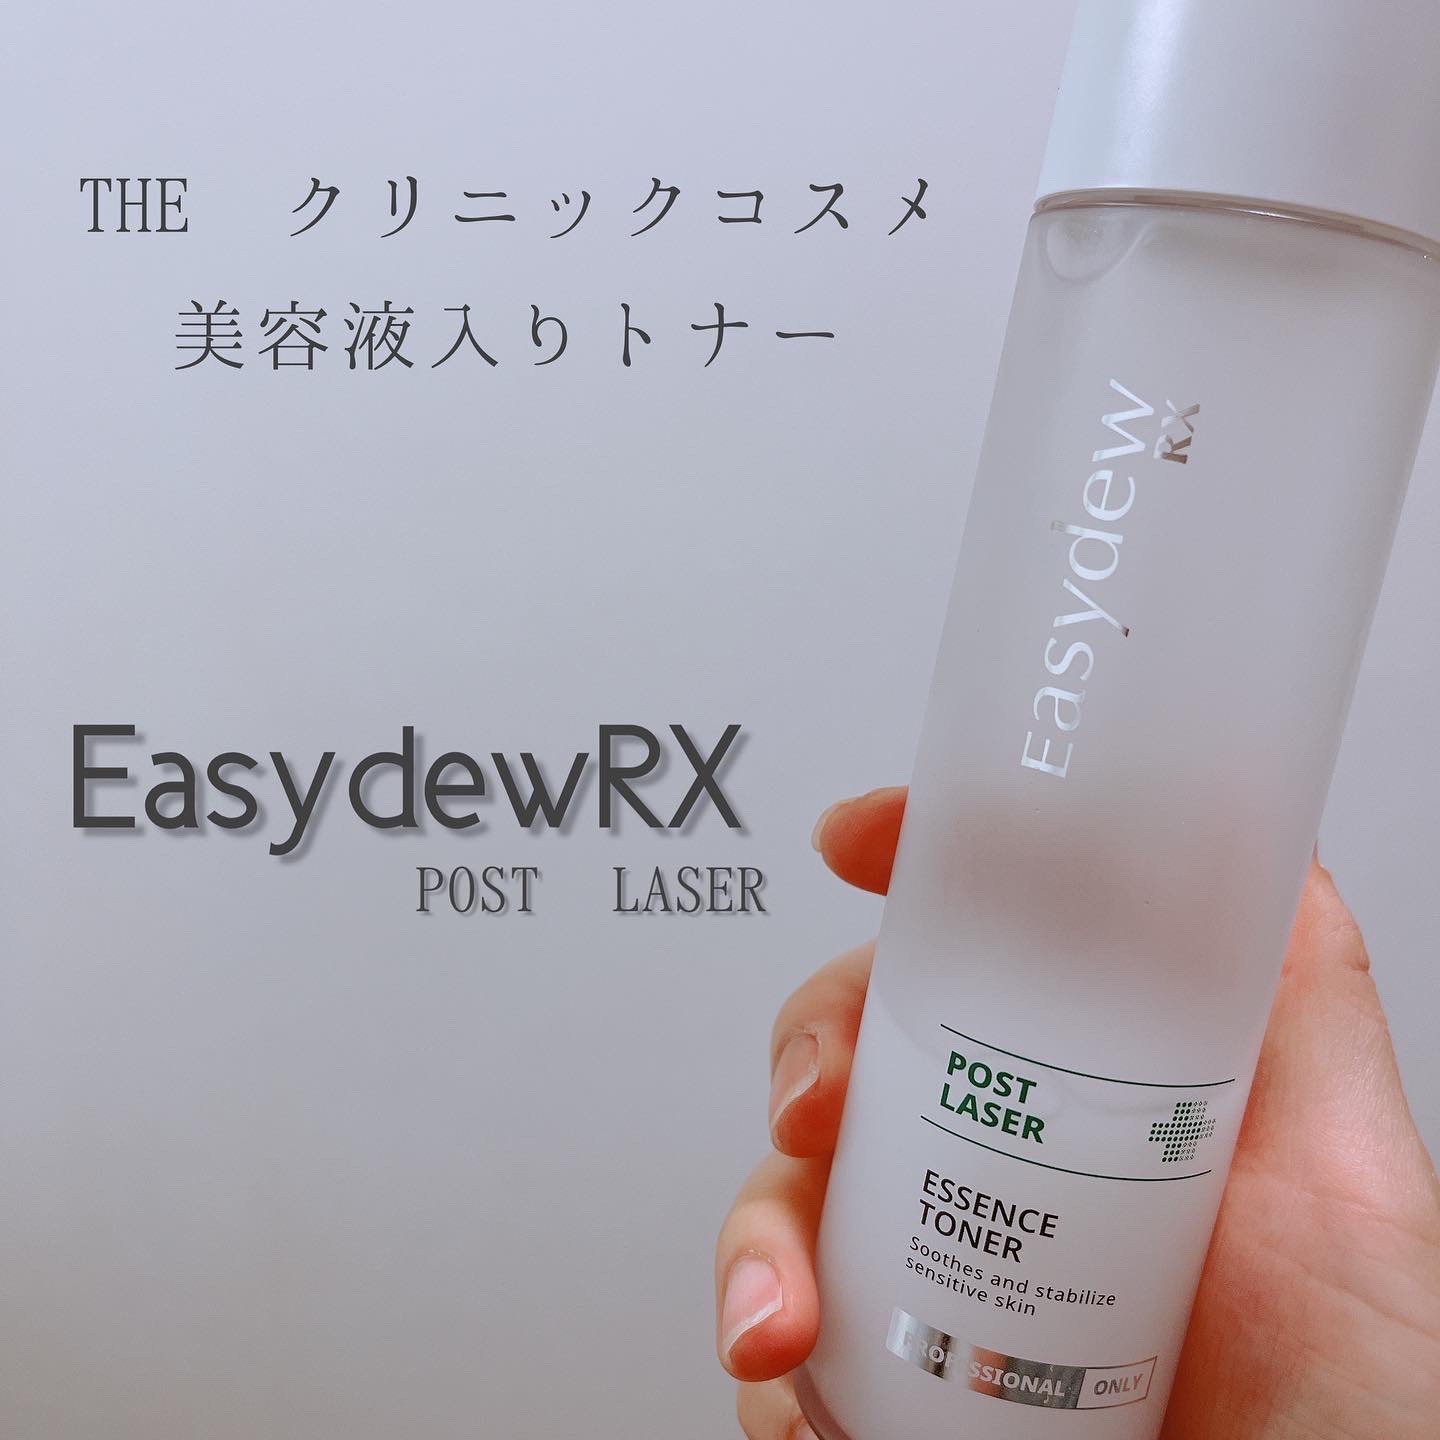 【Easydew RX】ポストレーザー エッセンストナー【新品未使用】